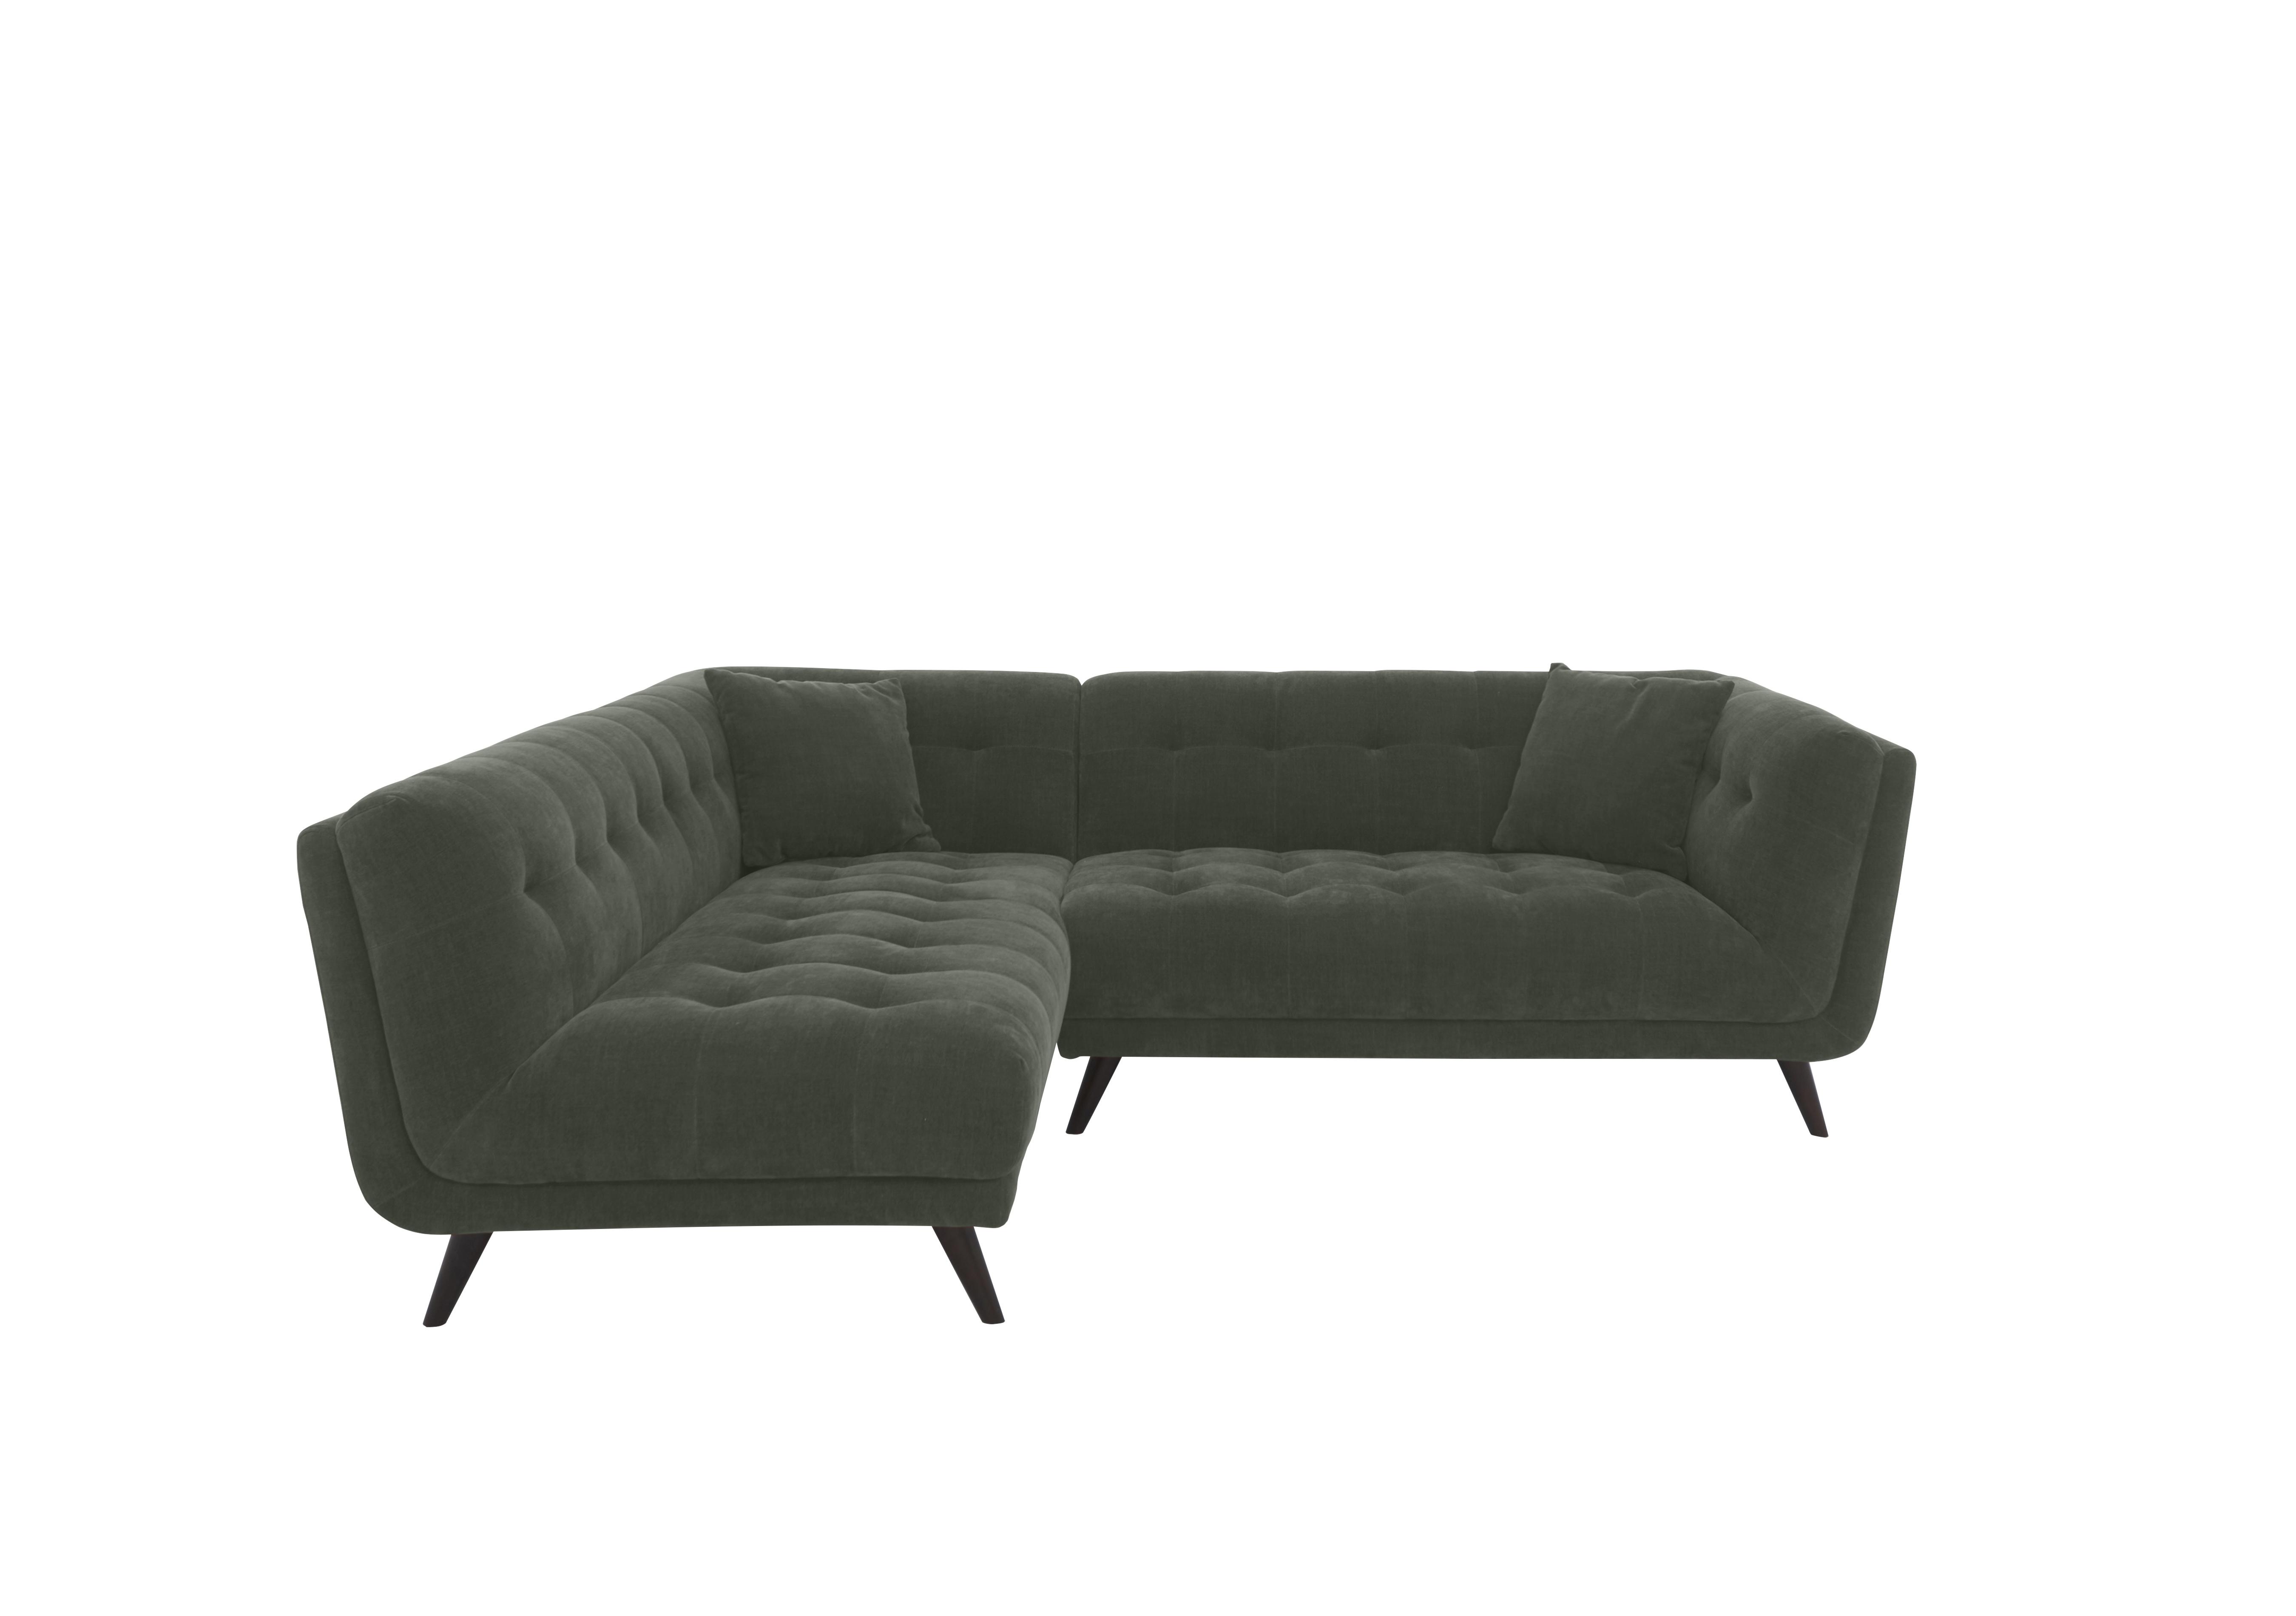 Rene Fabric Chaise End Corner Sofa in Manhattan 58001 Pine Es Ft on Furniture Village